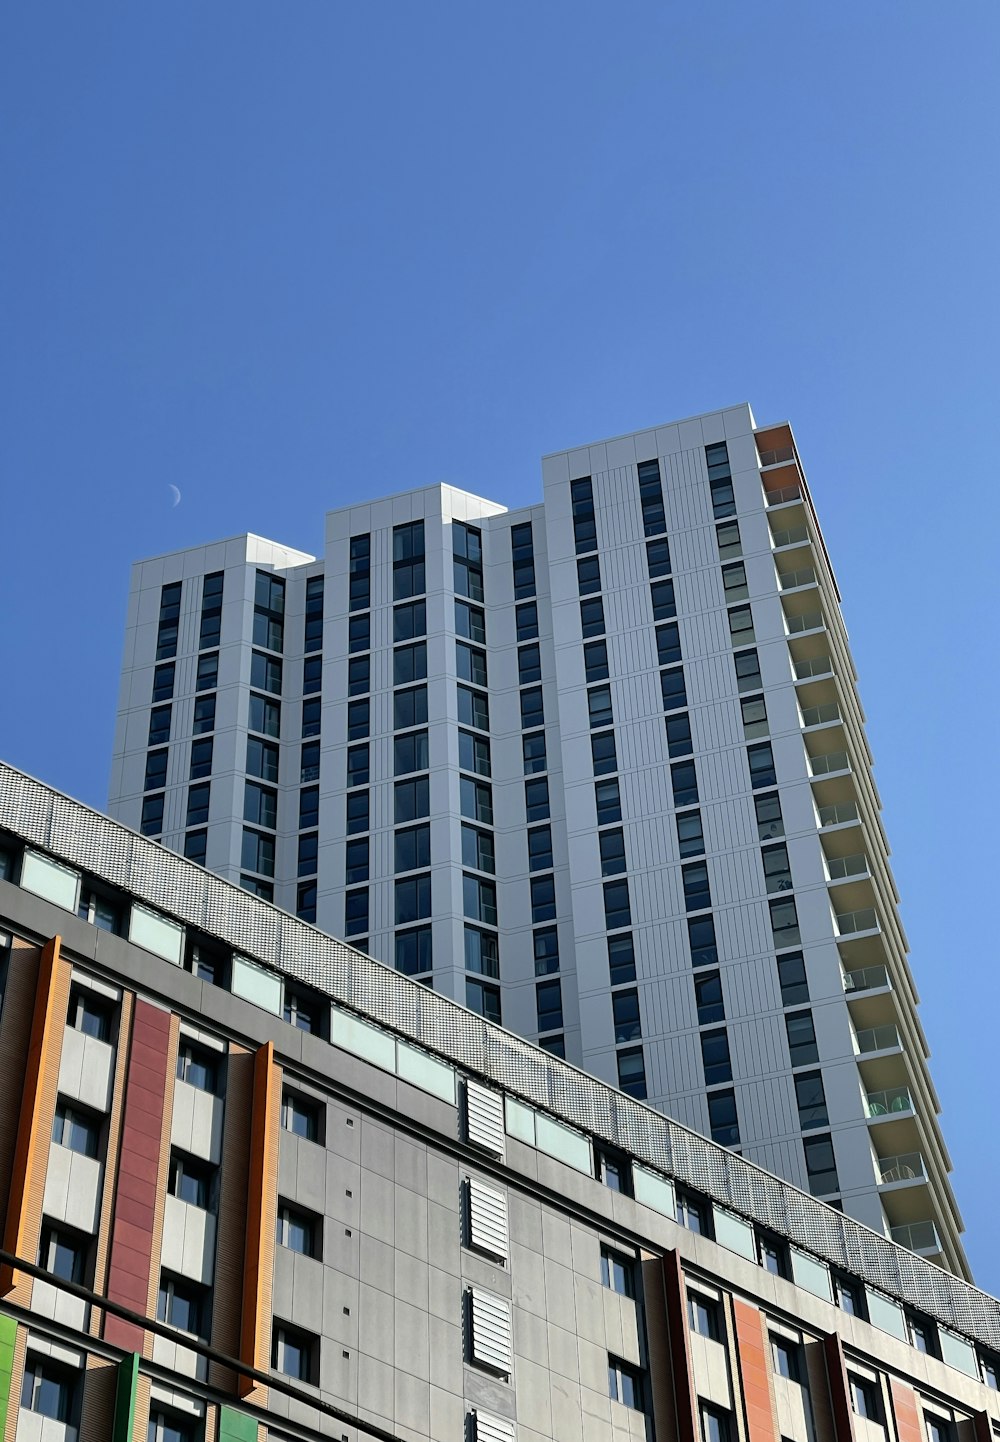 Un edificio alto con ventanas multicolores contra un cielo azul